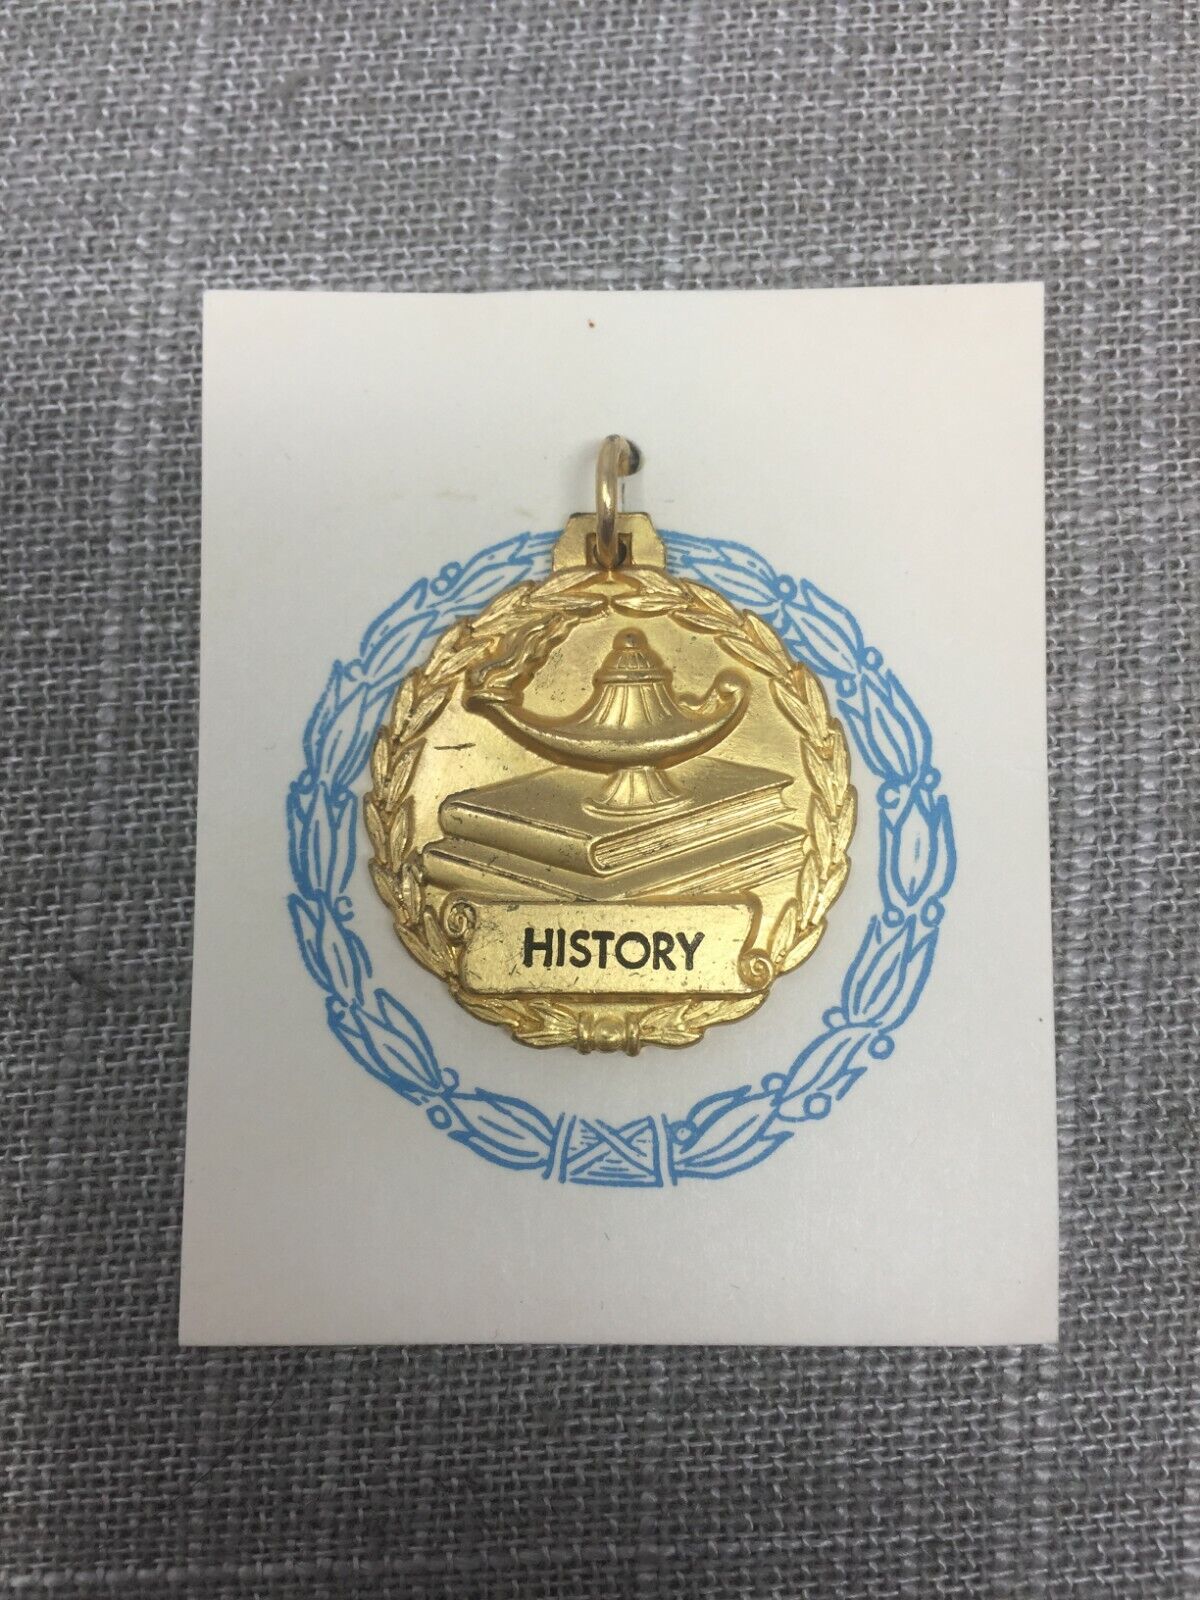 Balfour History Medal Award 10K Gold Plated Vintage 1970s Charm Pendant Engraved